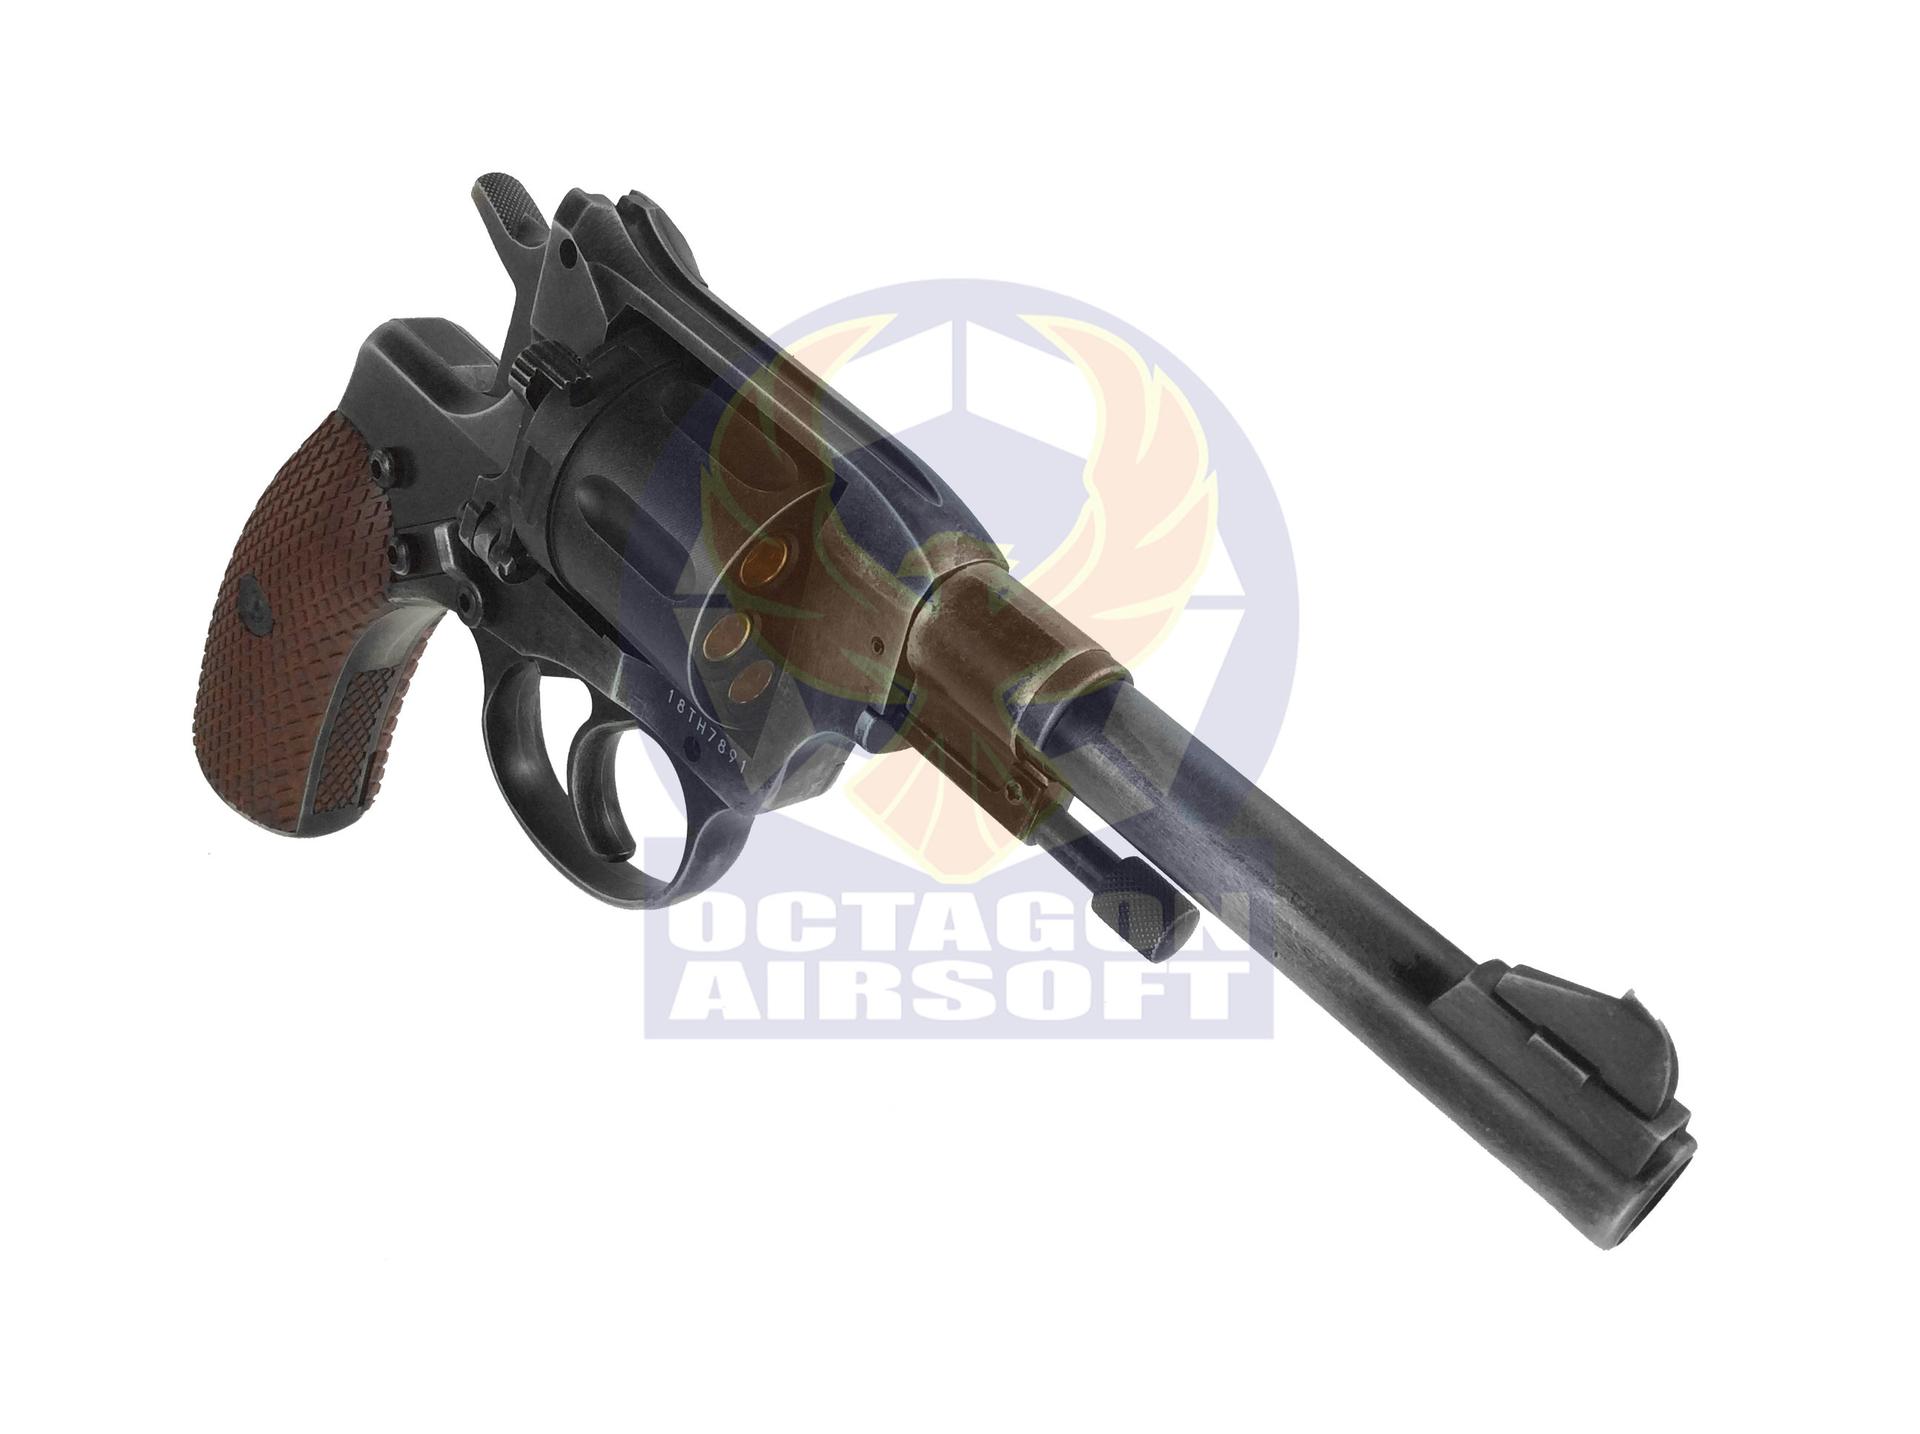 Gun Heaven 721 Nagant M1895 4 inch 6mm Co2 Revolver M1939 Marking Weathered) Toy Airsoft